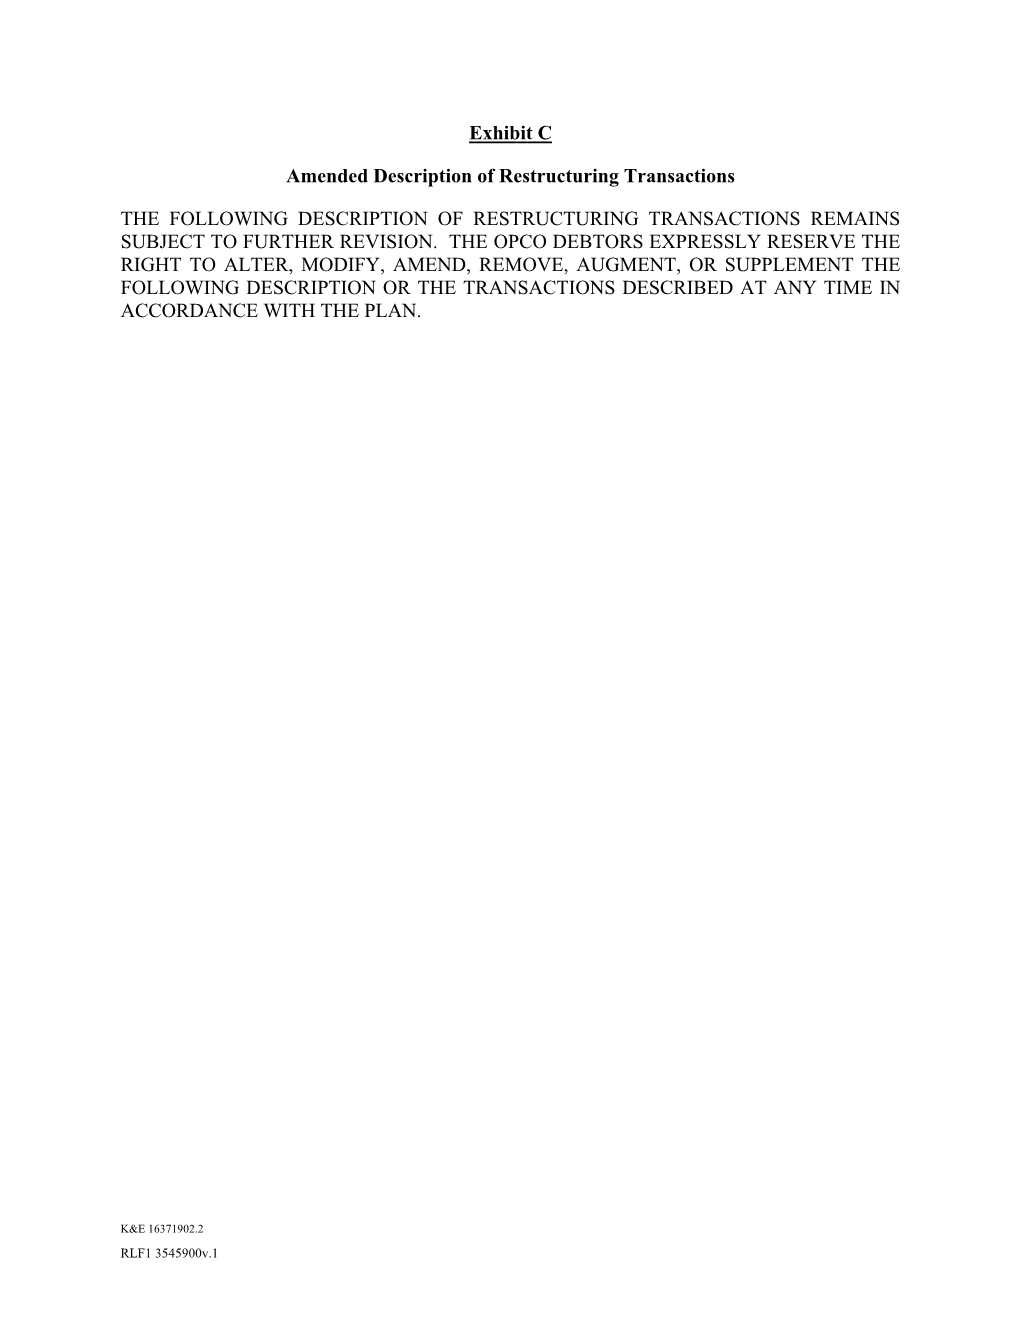 Exhibit C Amended Description of Restructuring Transactions the FOLLOWING DESCRIPTION of RESTRUCTURING TRANSACTIONS REMAINS SUBJ